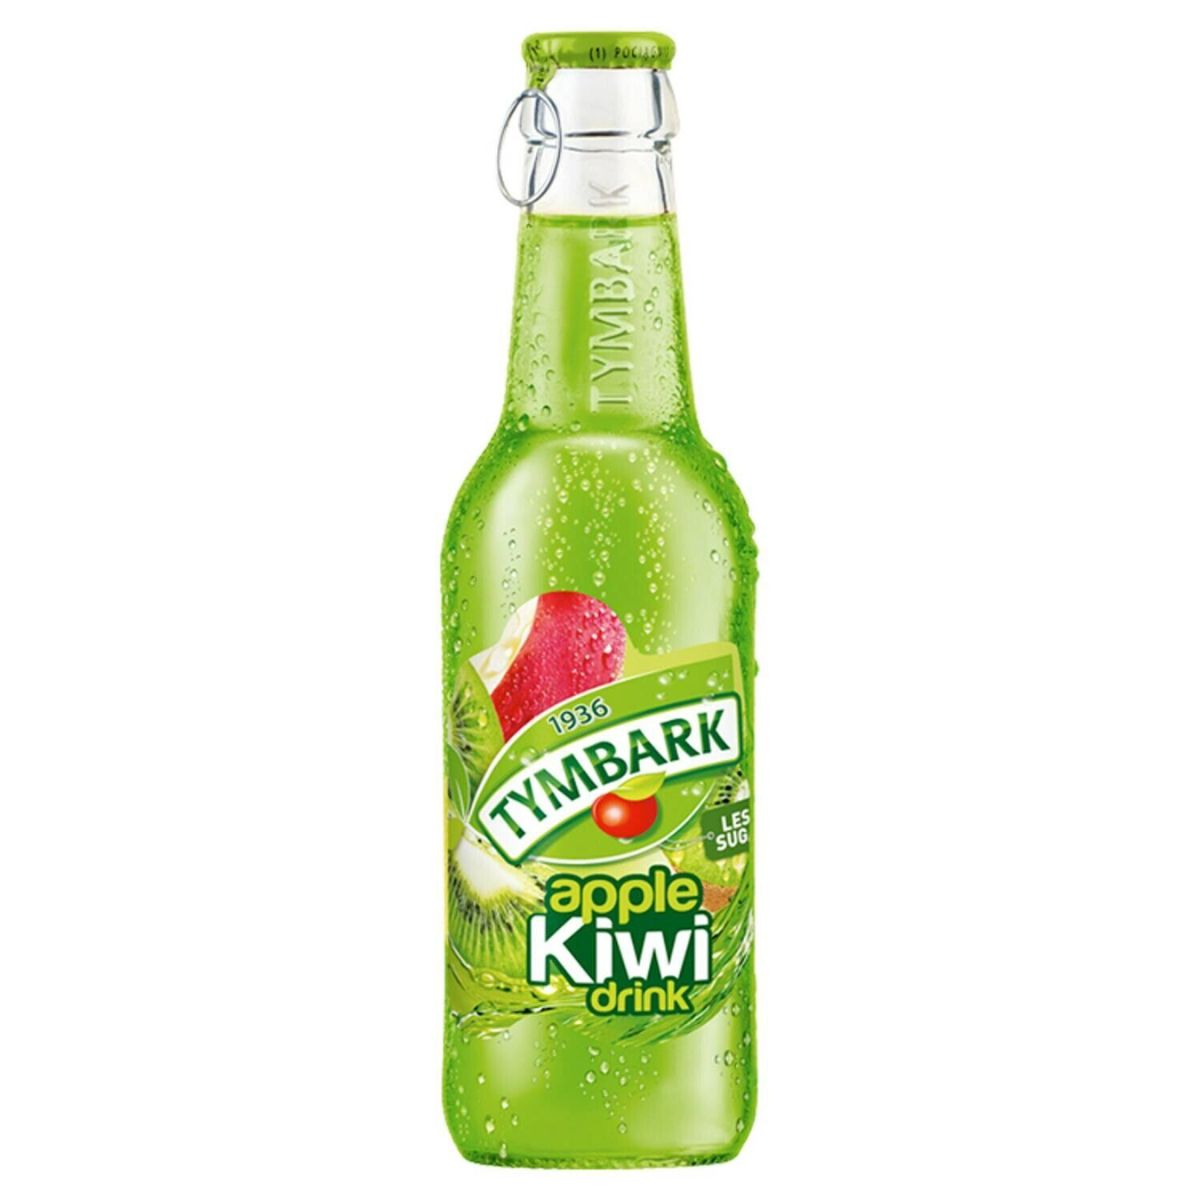 A bottle of Tymbark - Apple Kiwi - 250ml on a white background.